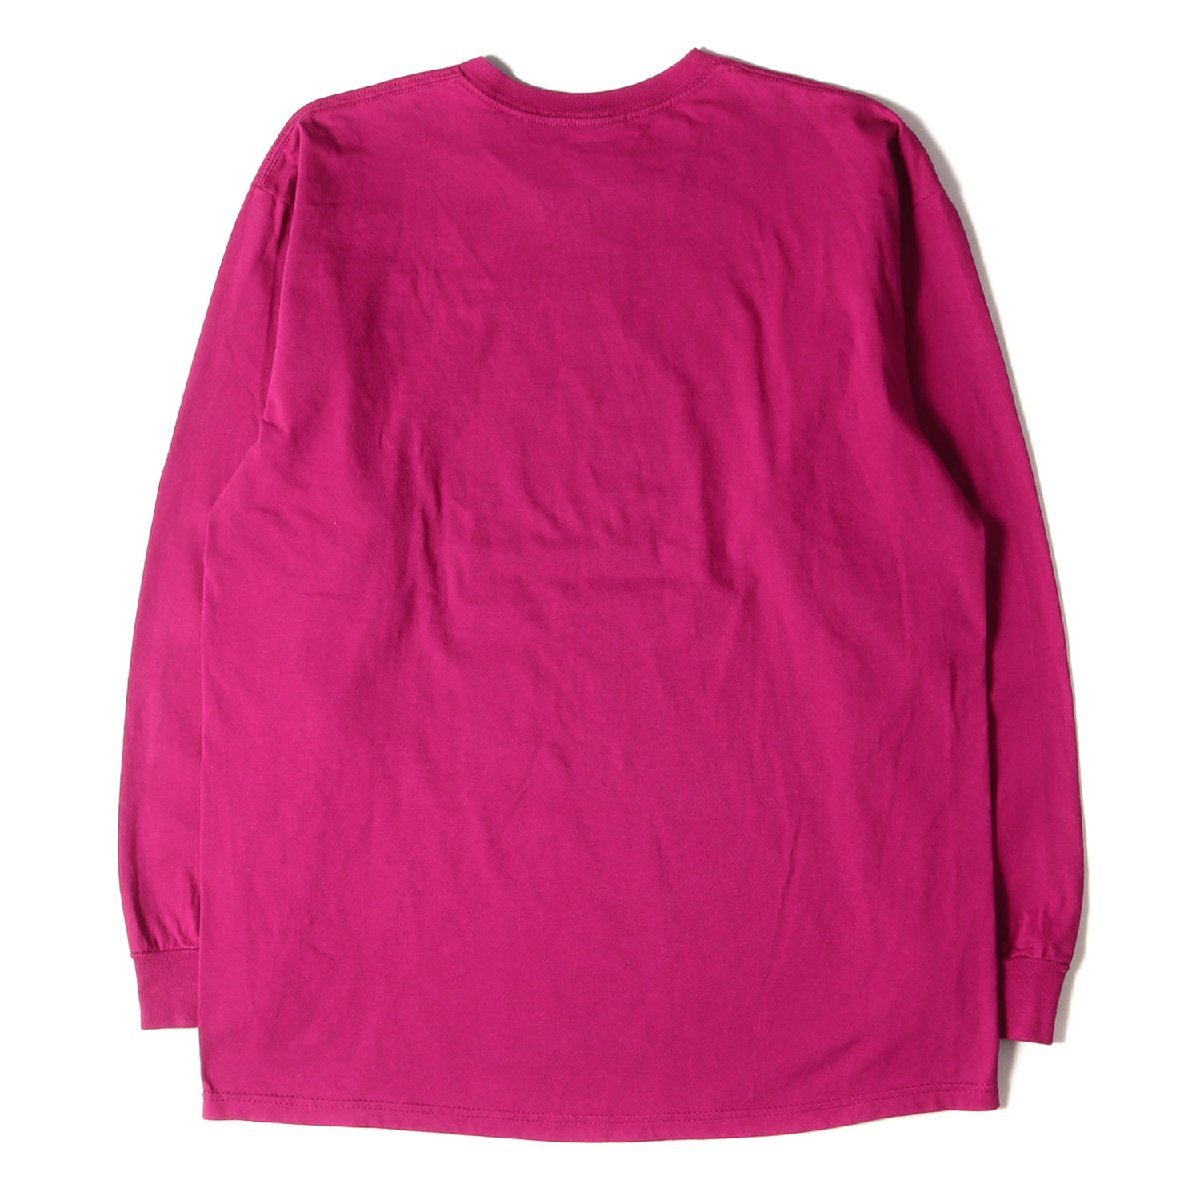 STUSSY Stussy футболка размер :L колледж Logo длинный рукав футболка пурпурный tops cut and sewn длинный рукав Street бренд 